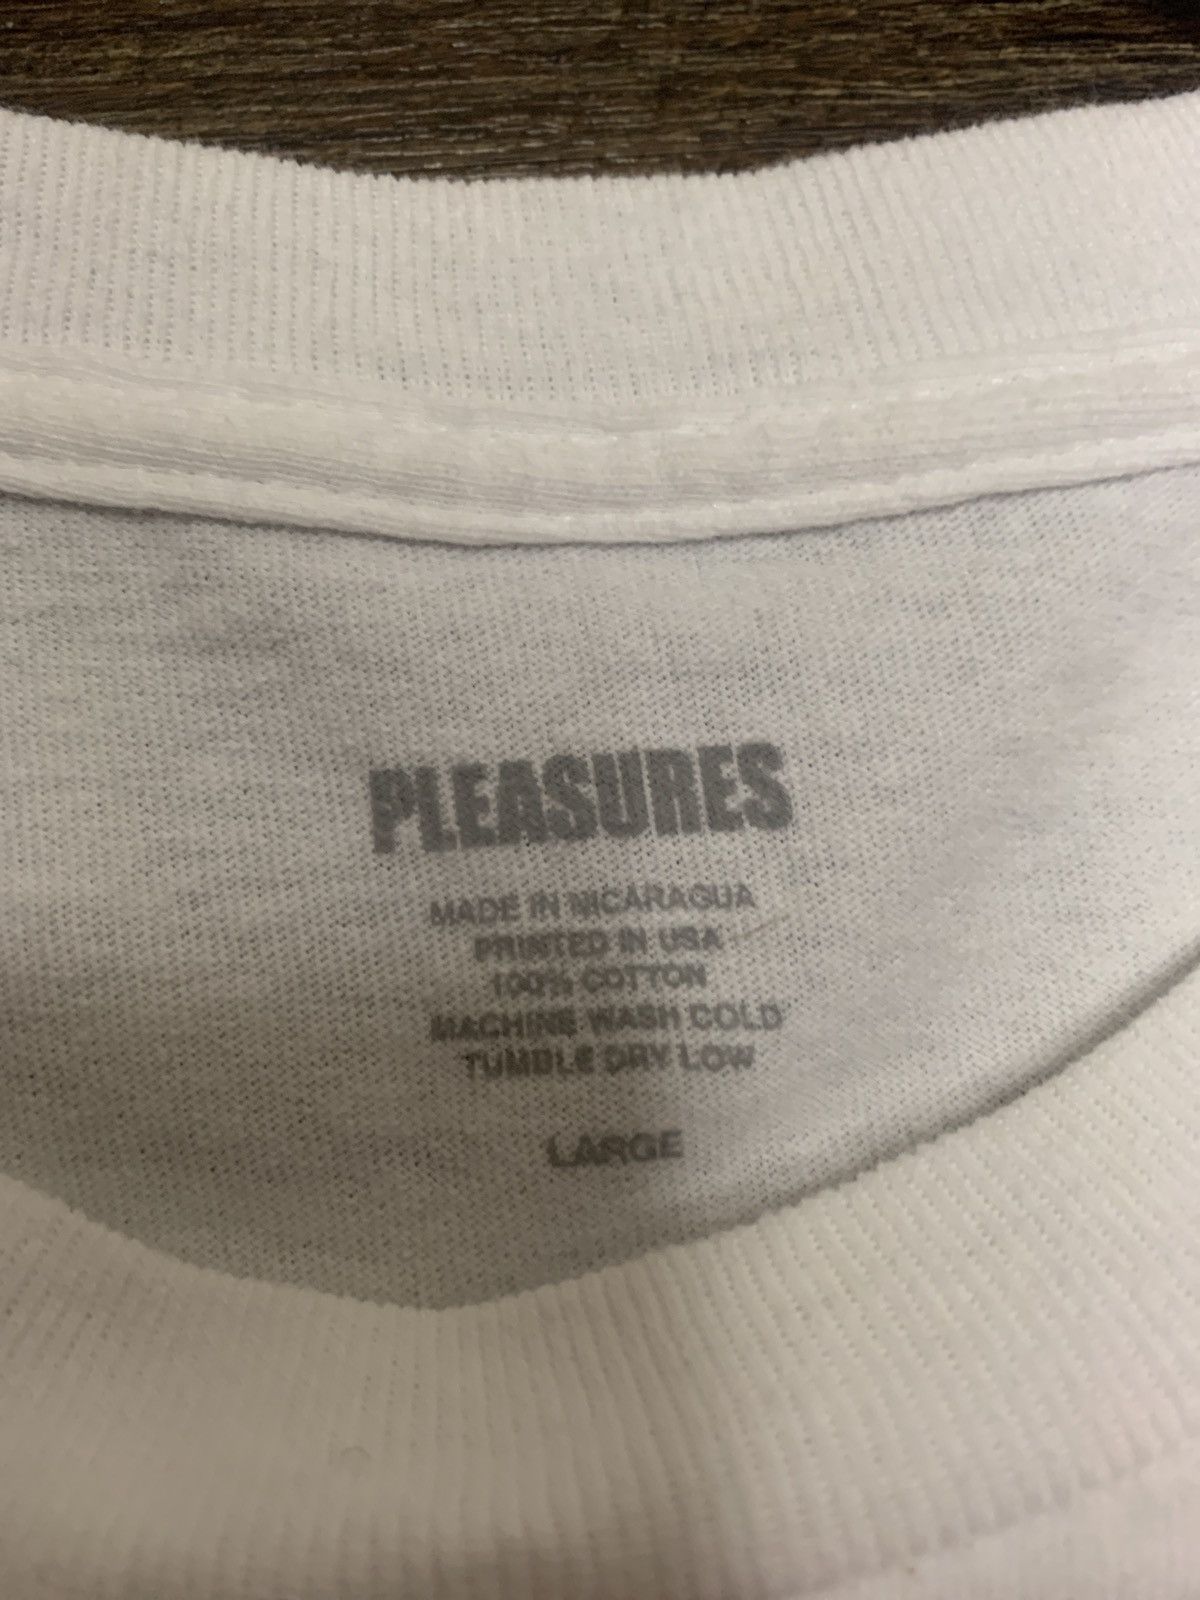 Pleasures Pleasures short sleeve “Stoned and Alone” Size US L / EU 52-54 / 3 - 3 Thumbnail